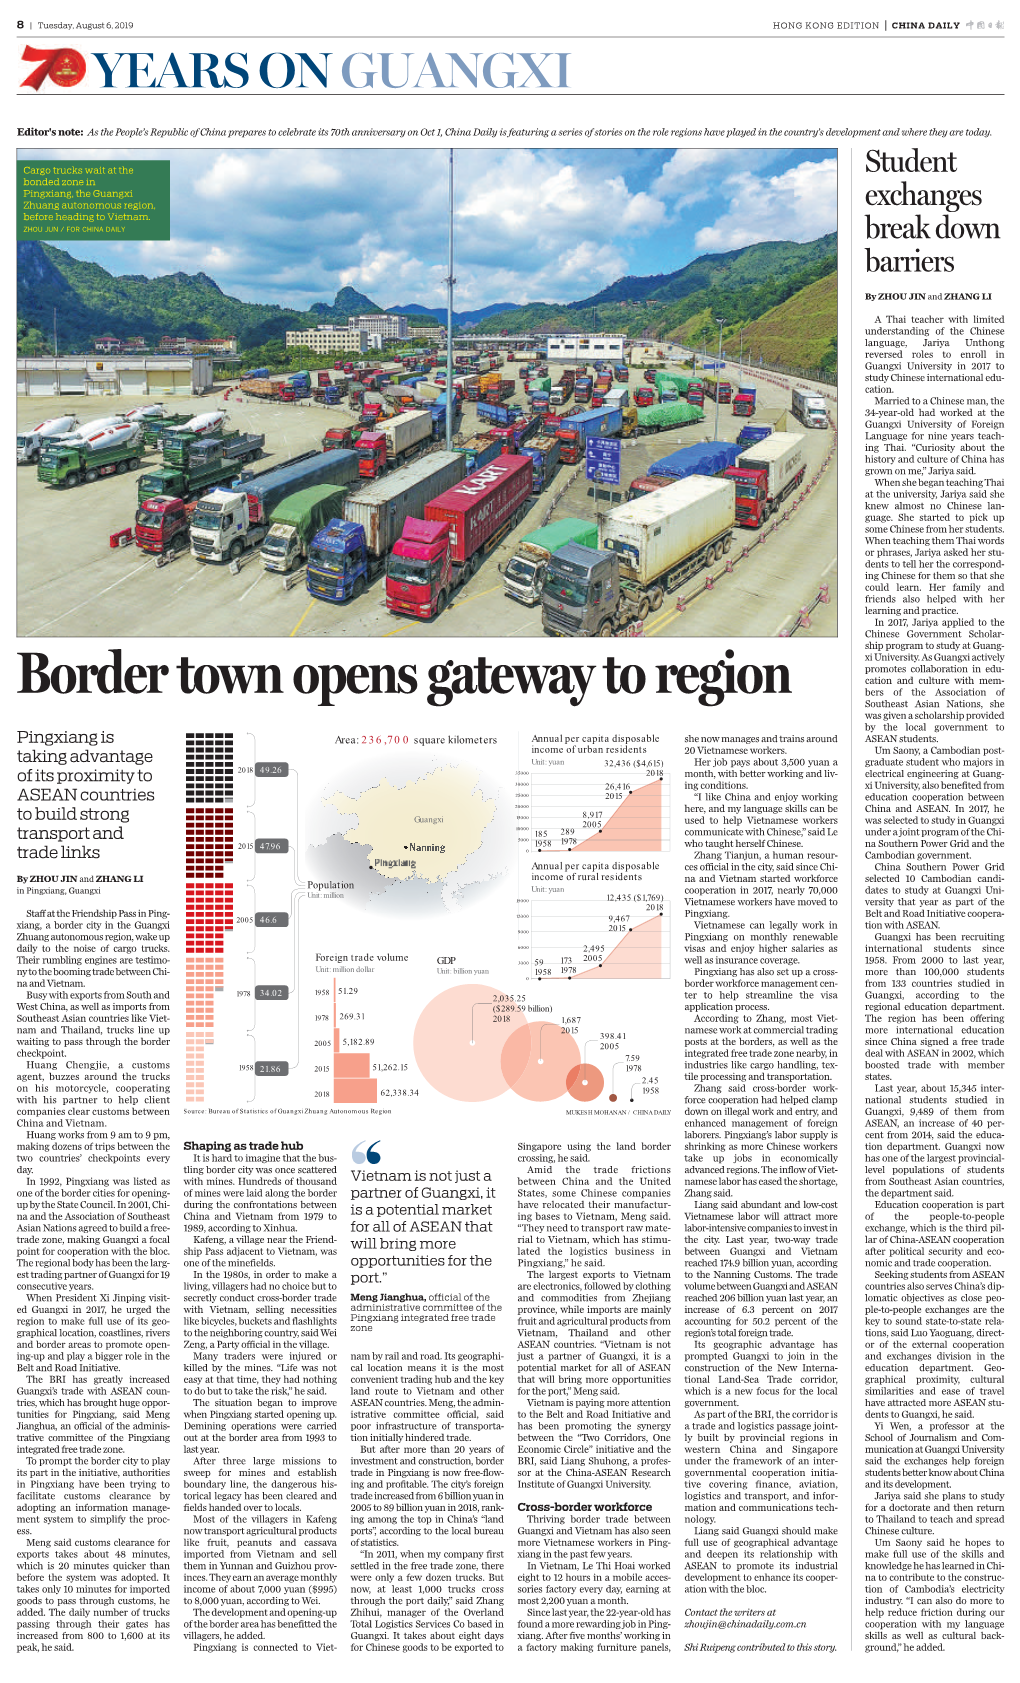 Border Town Opens Gateway to Region